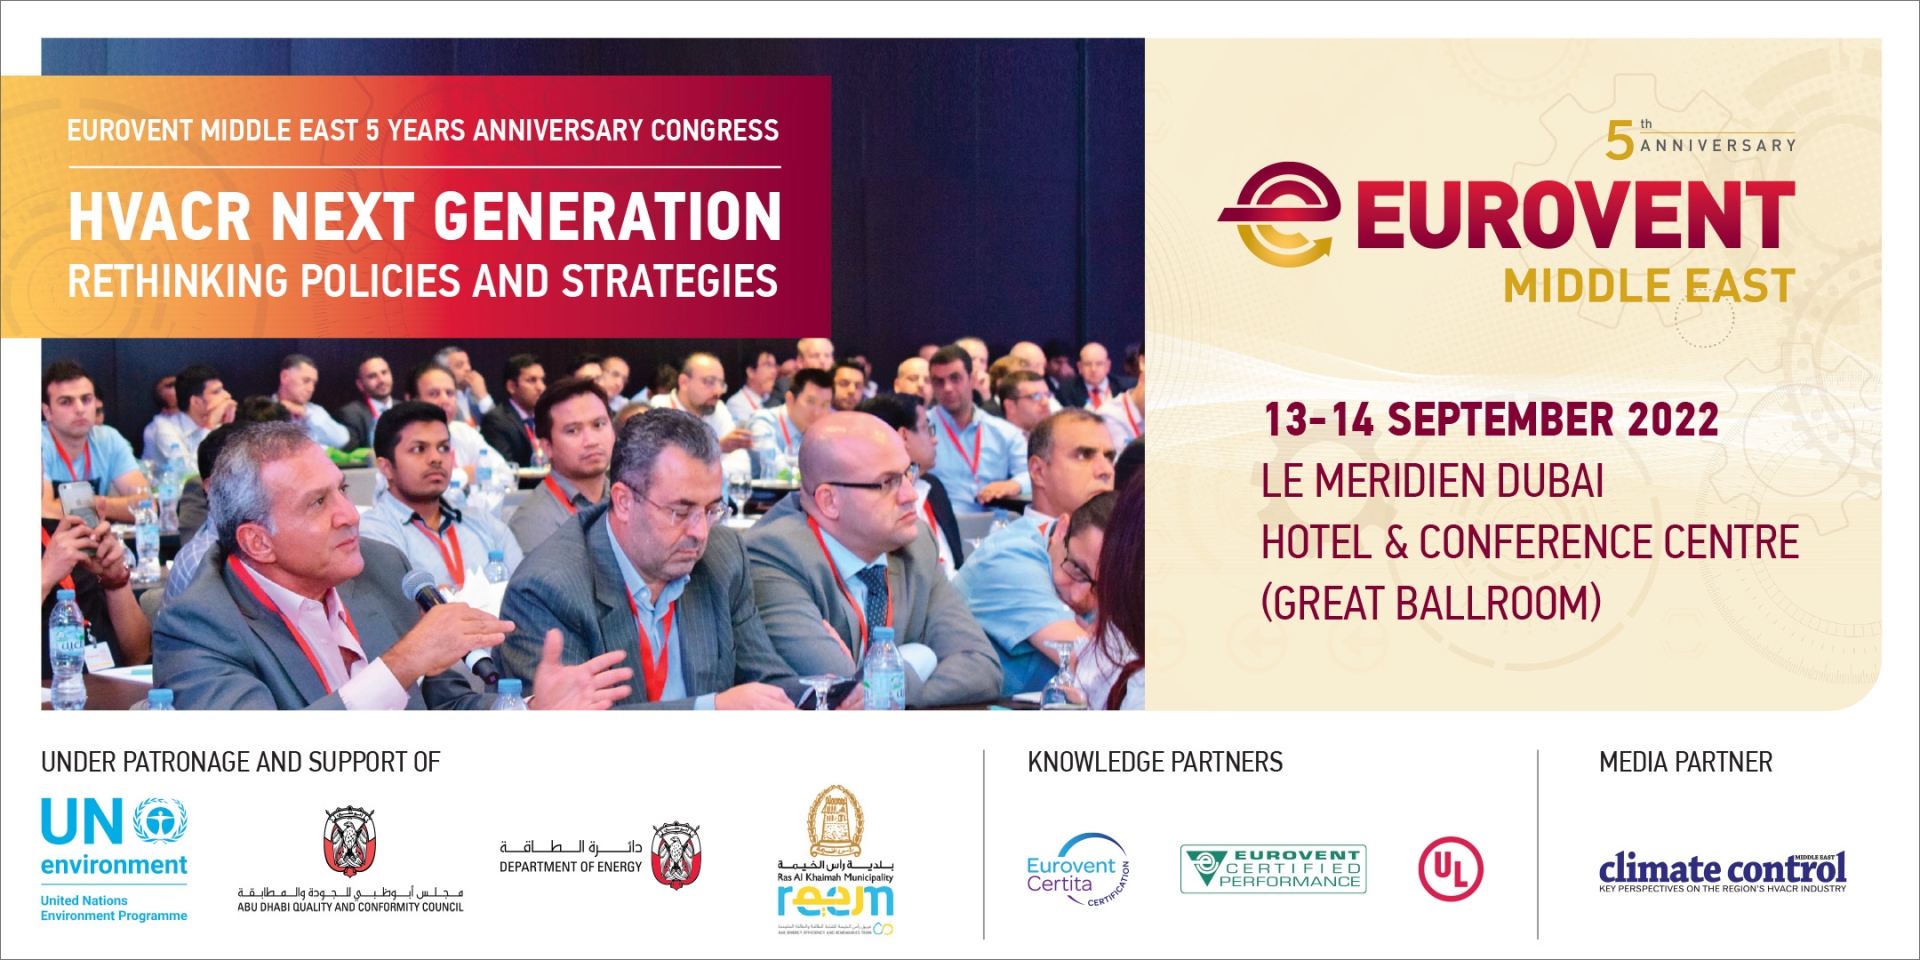 2022 - Eurovent Middle East announces HVACR Next Generation event